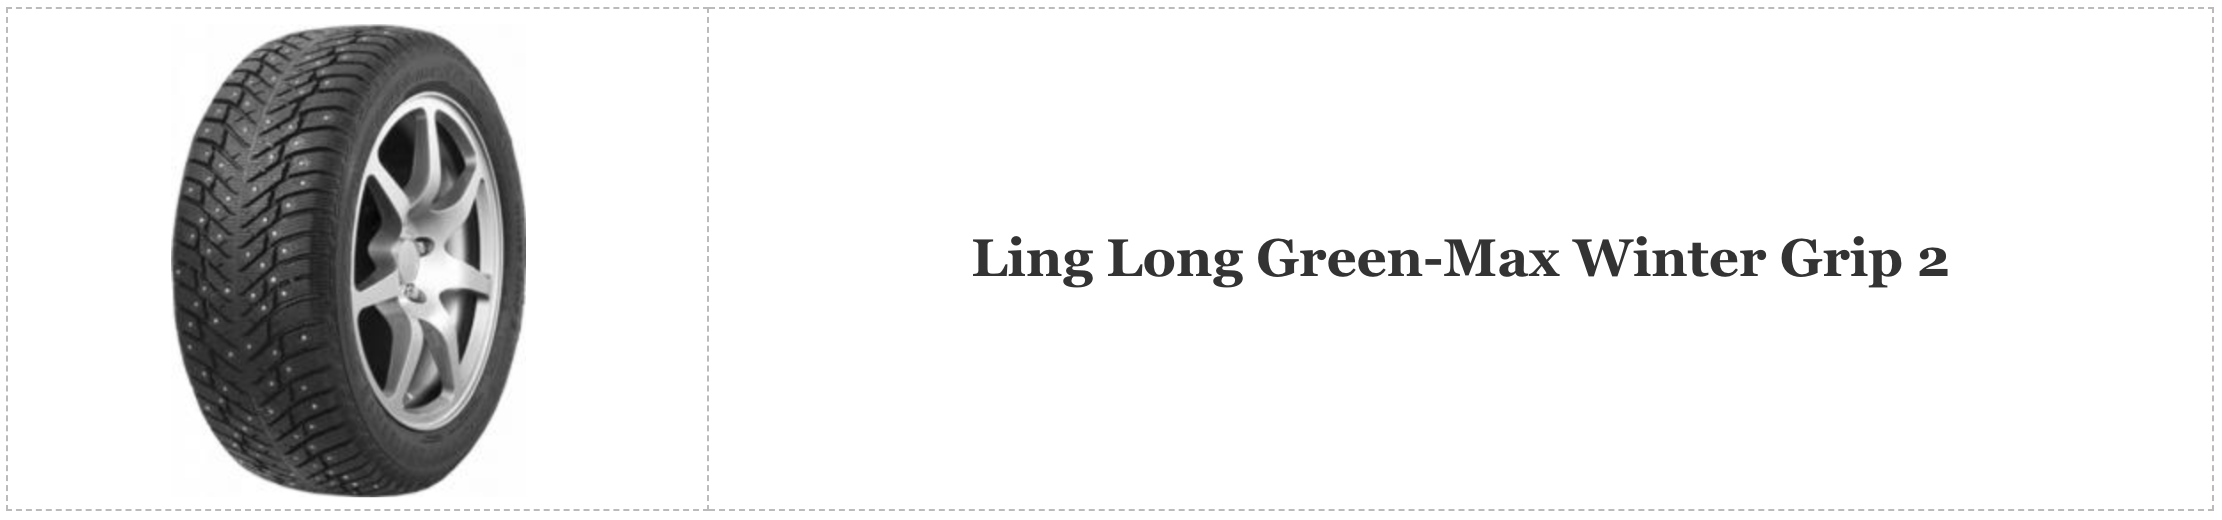 Ling Long Green-Max Winter Grip 2